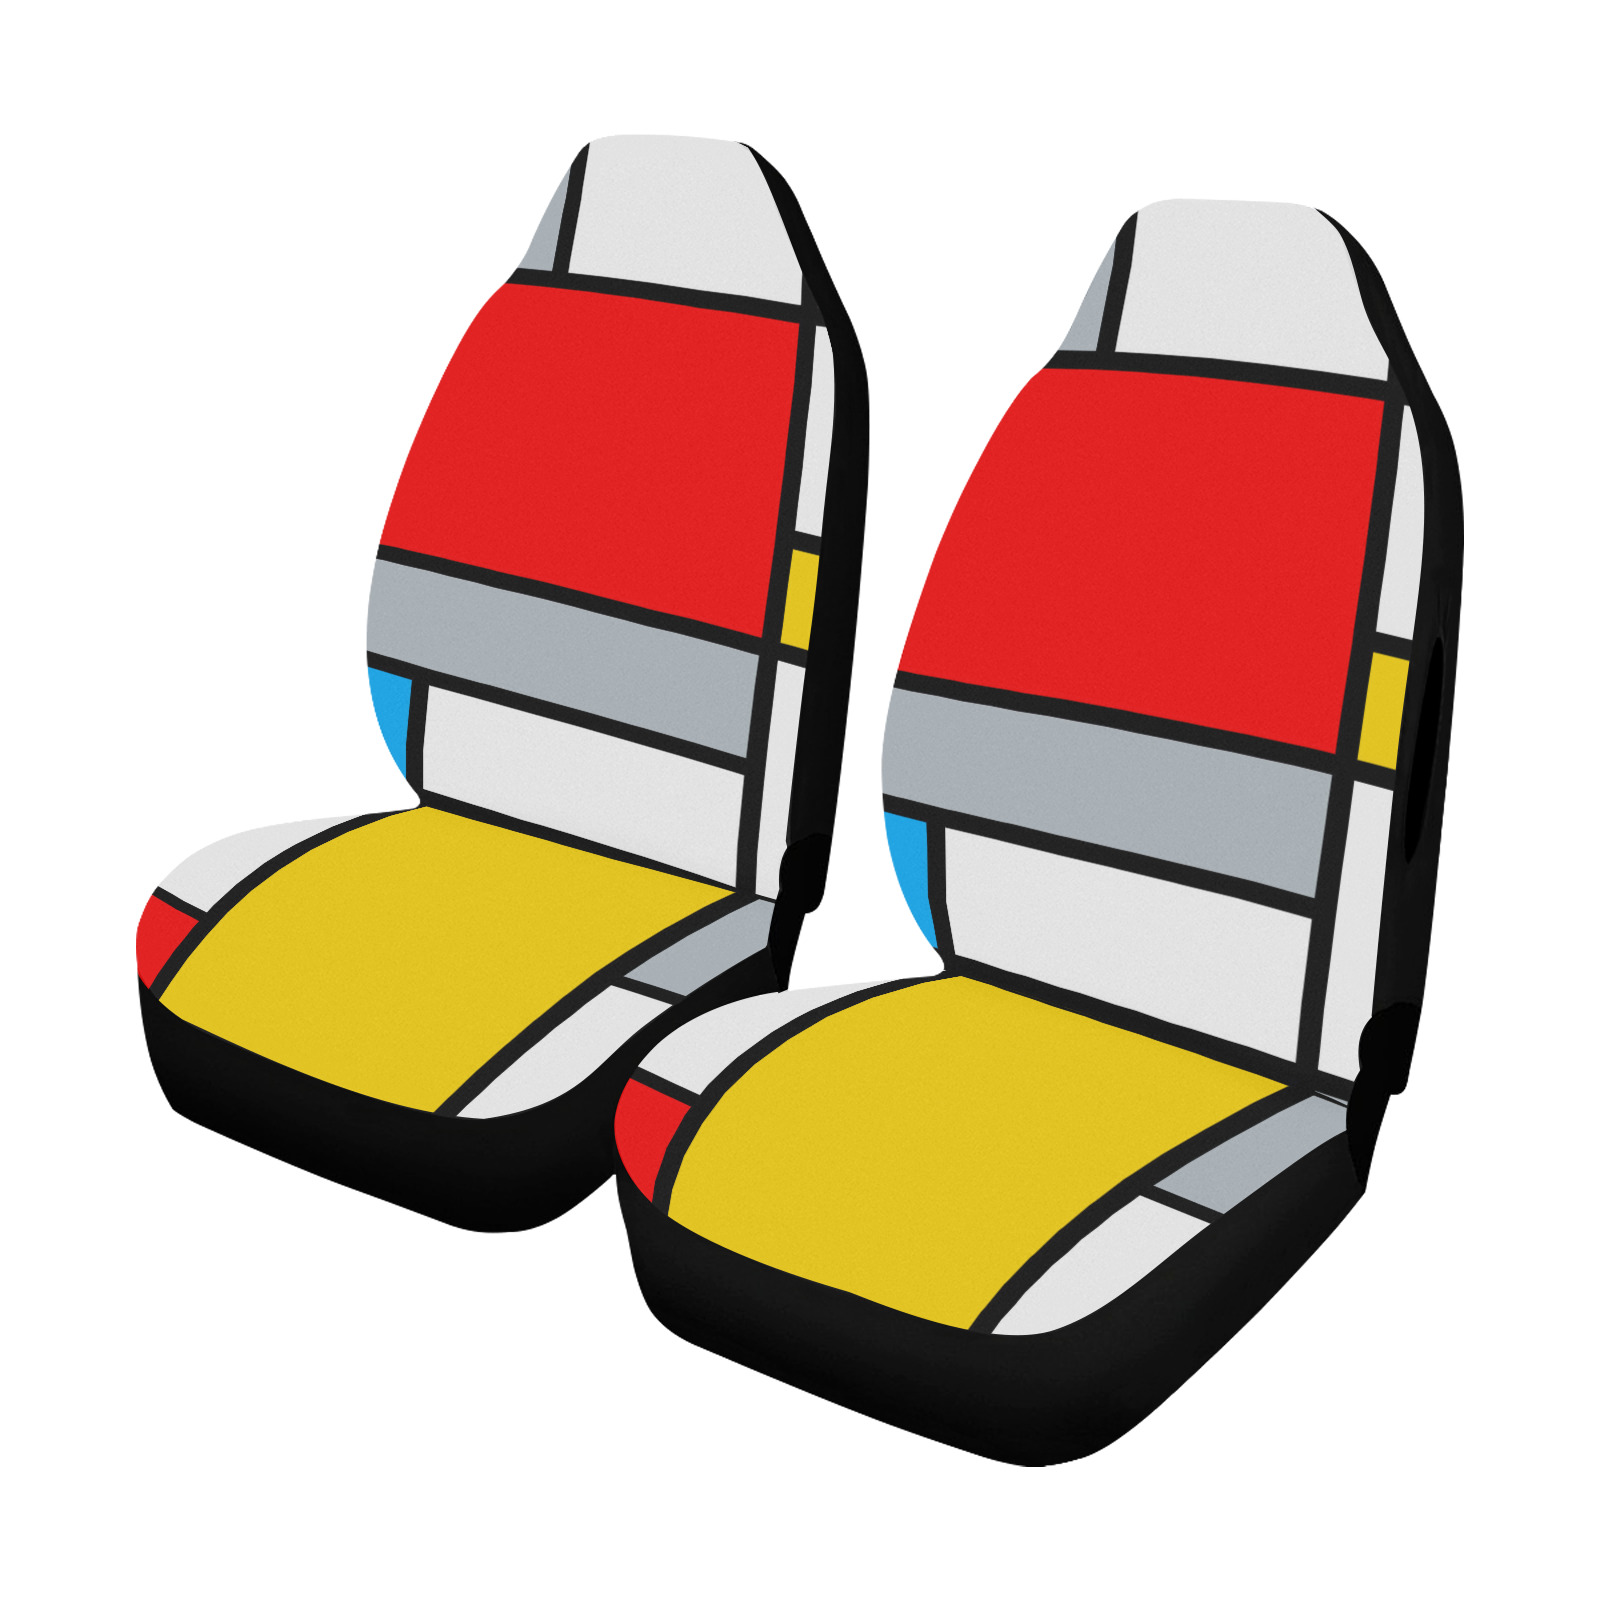 Mondrian Style Color Composition Geometric Retro Art Car Seat Cover Airbag Compatible (Set of 2)